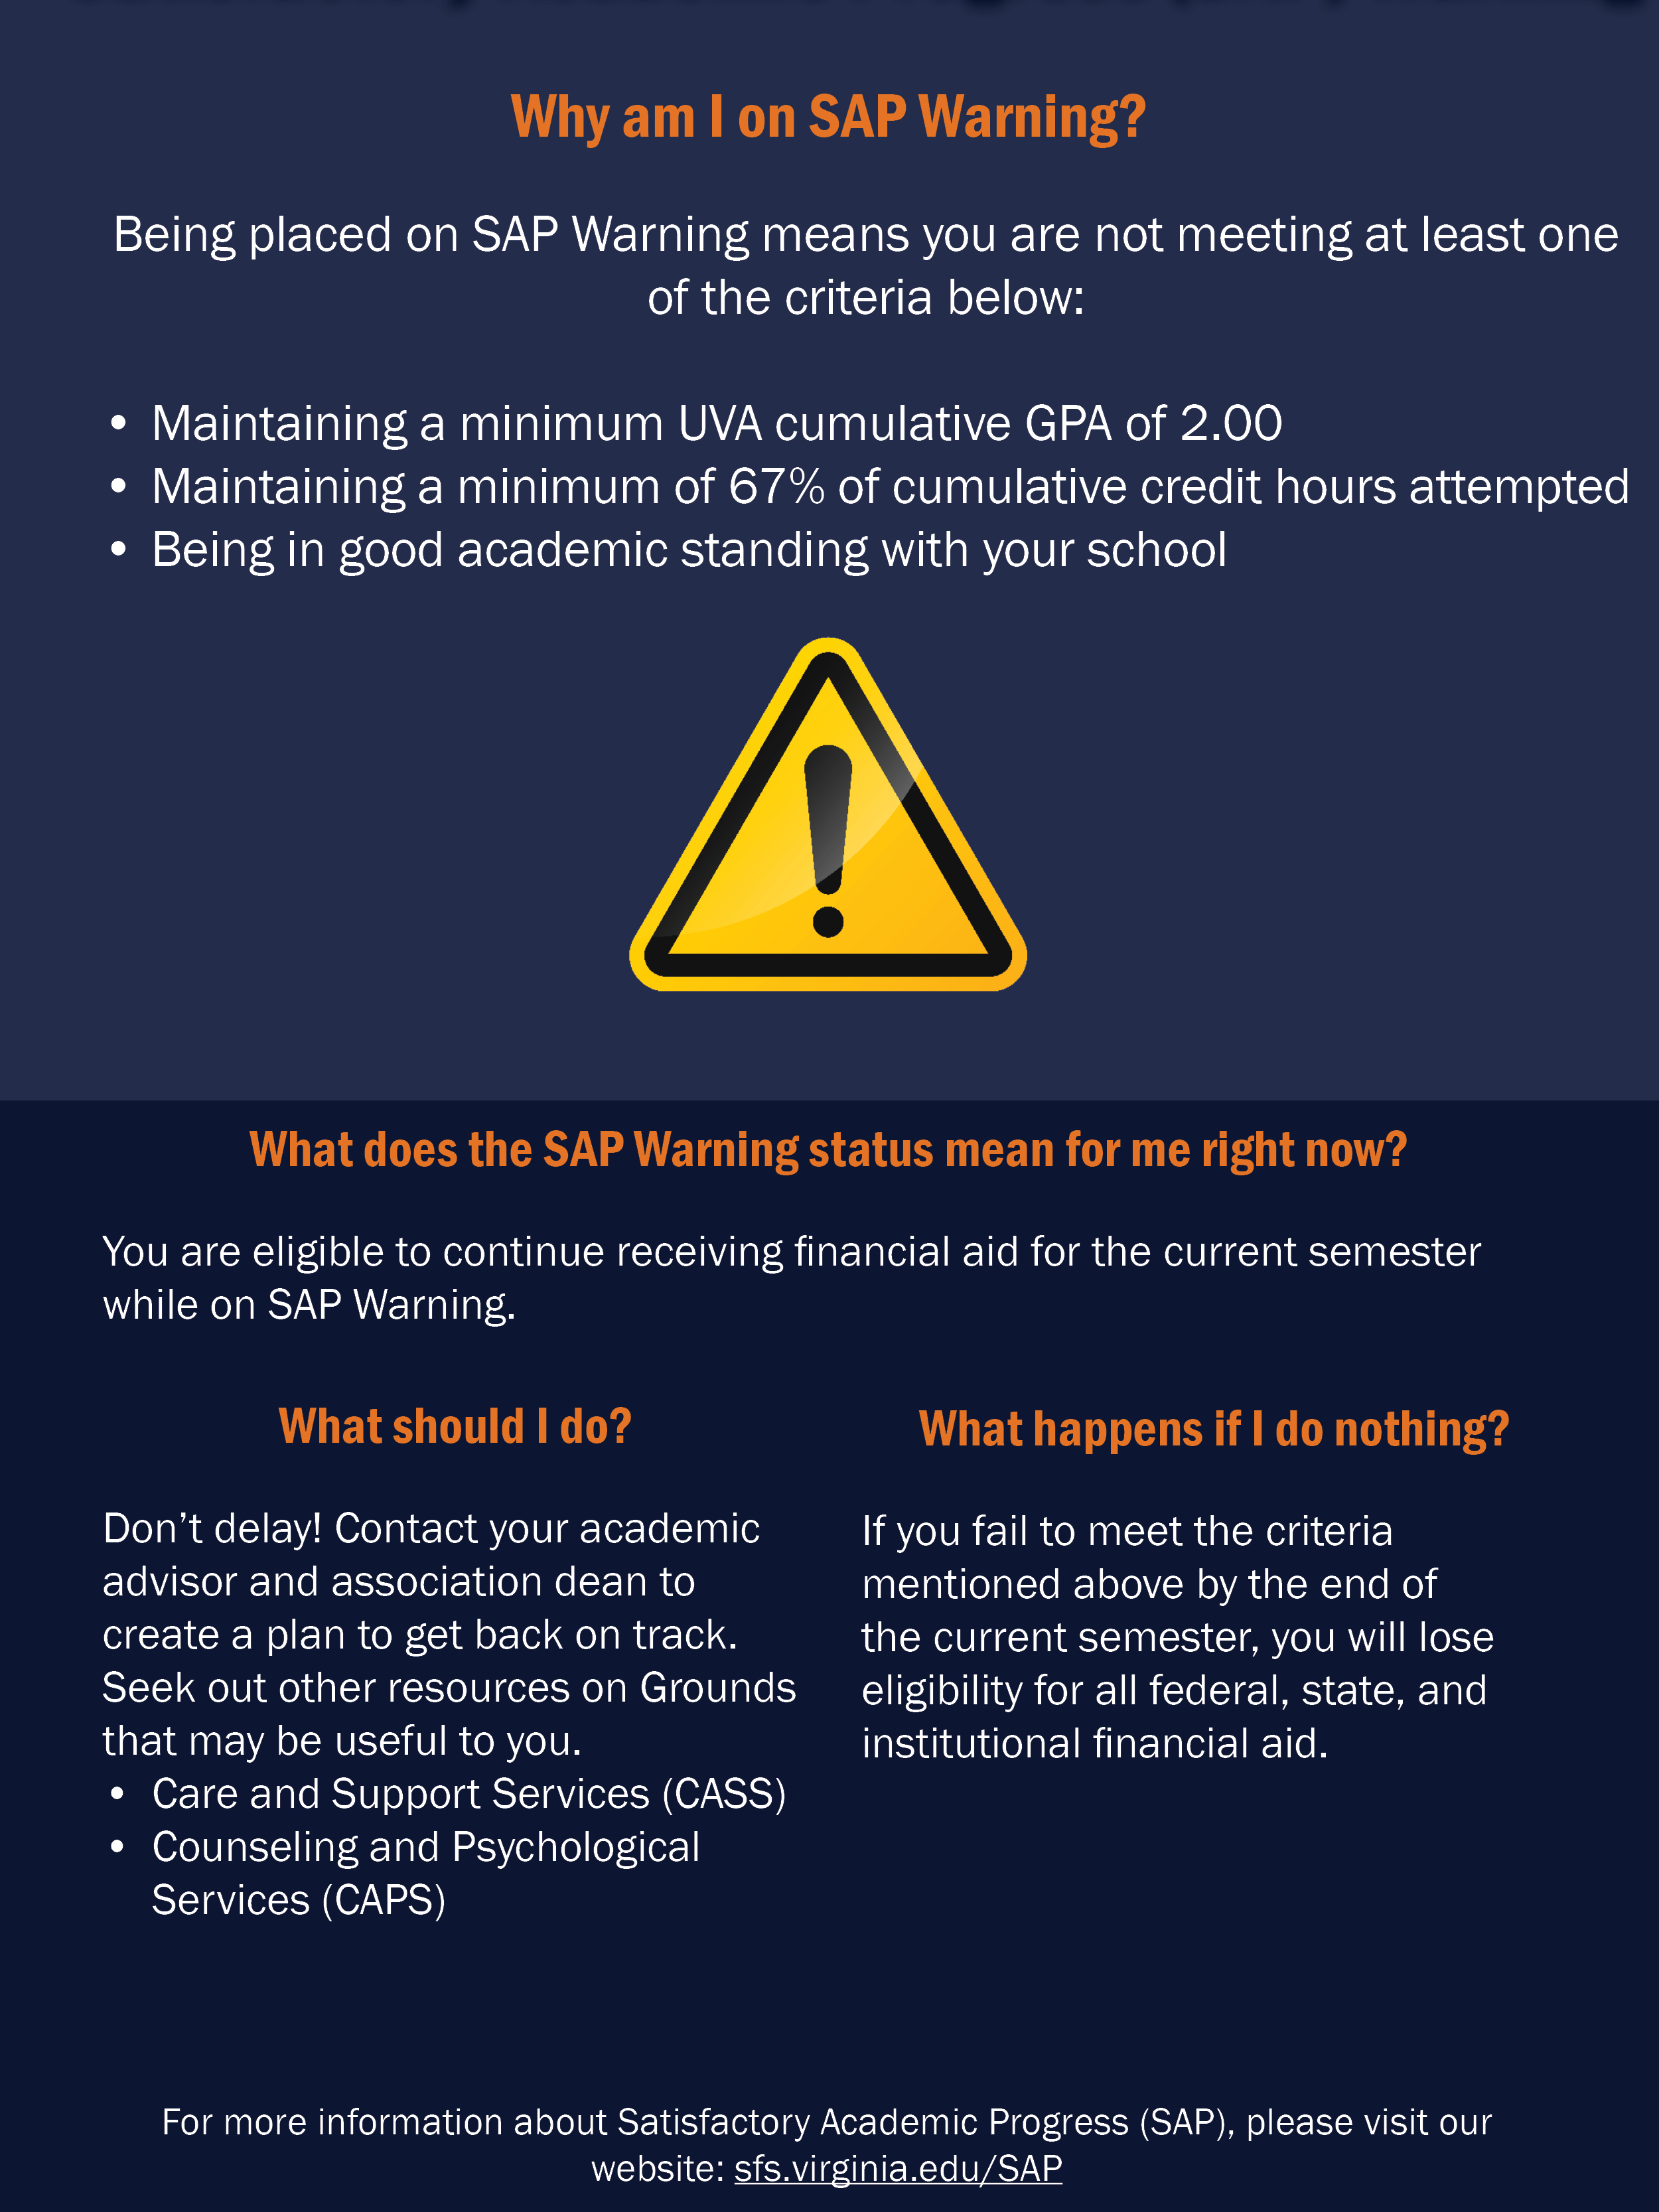 Satisfactory Academic Progress (SAP)